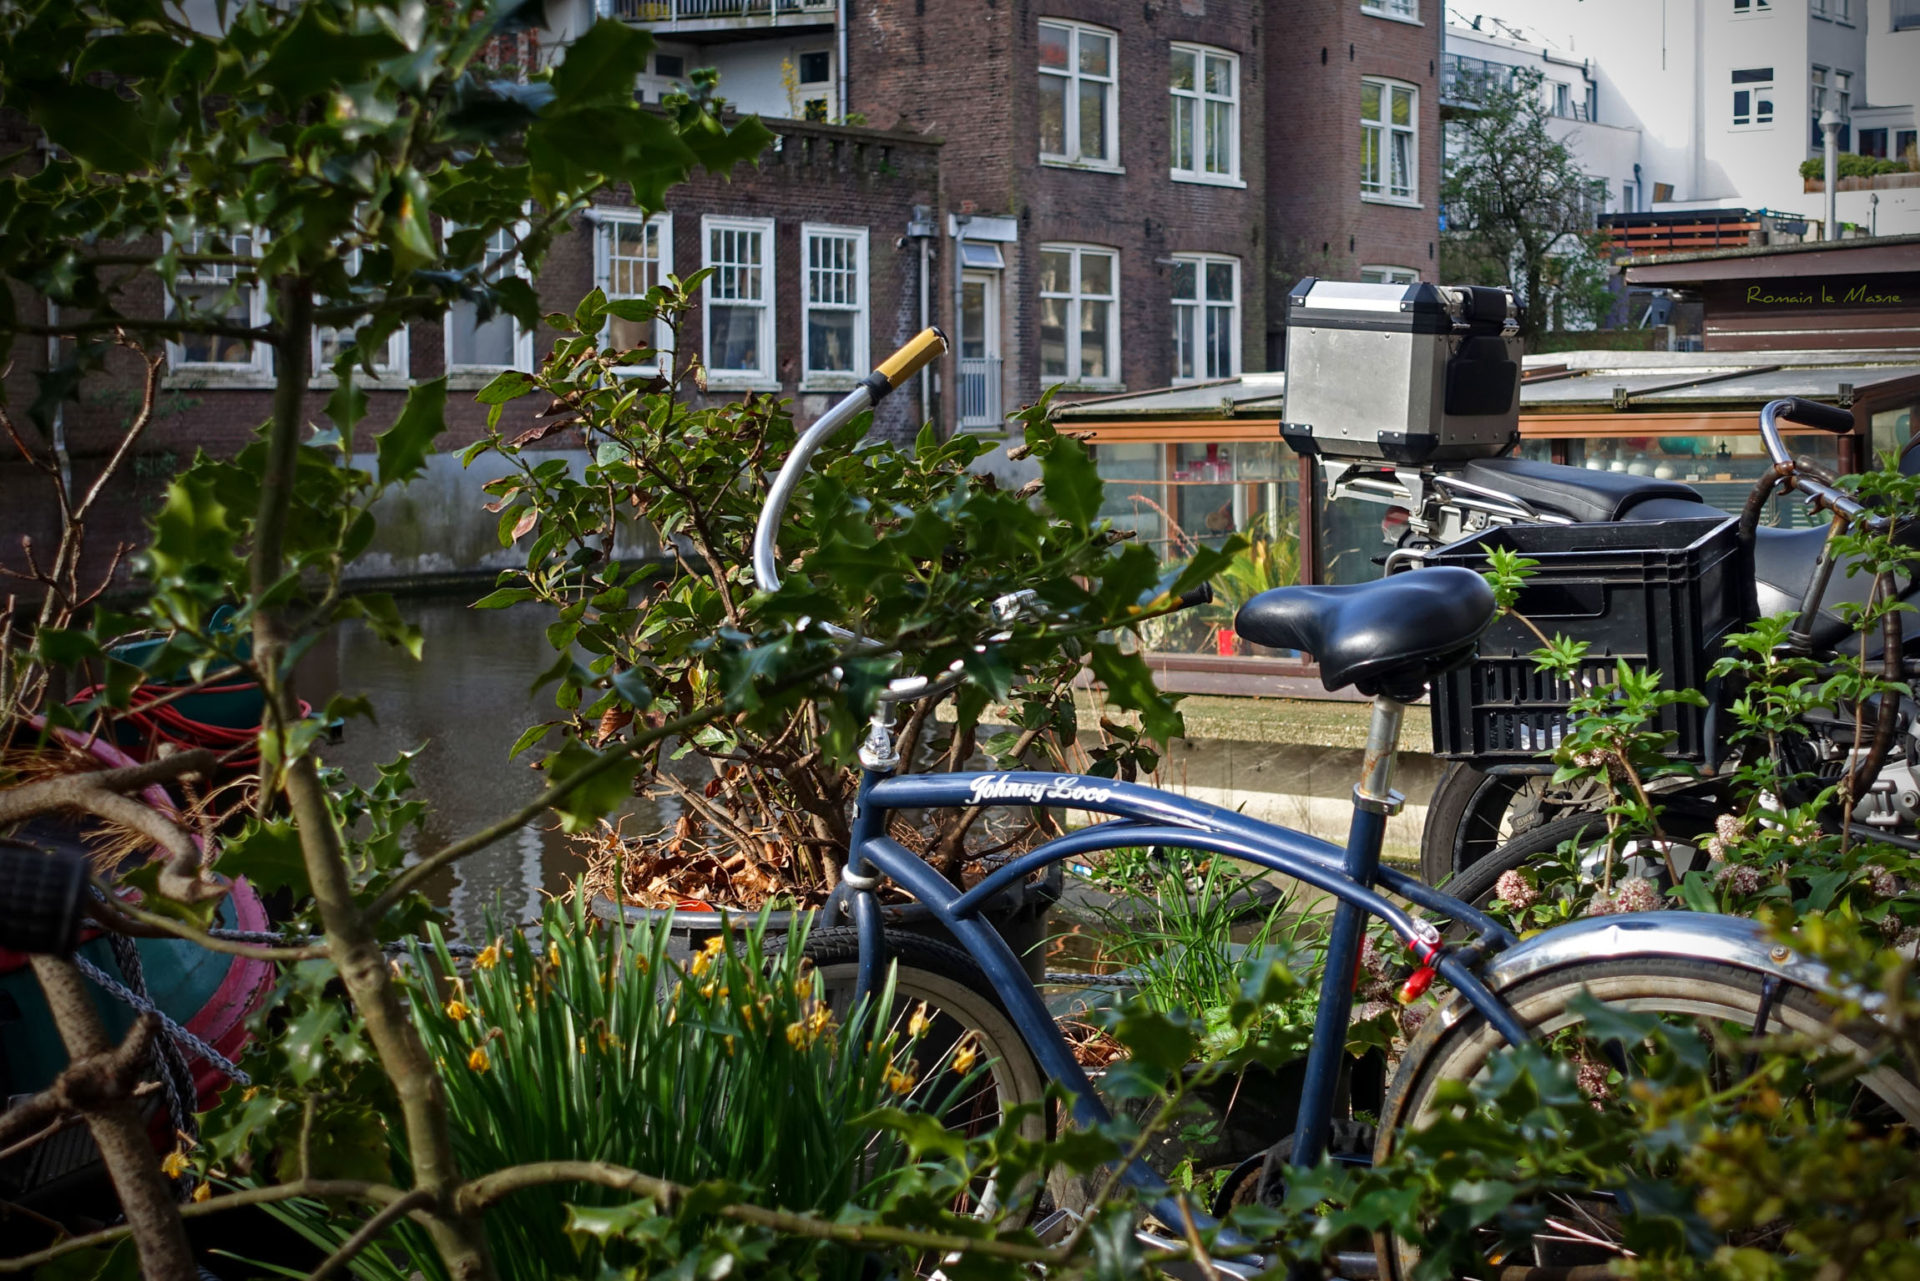 Bicycle - Amsterdam - Apr17 (2x3)